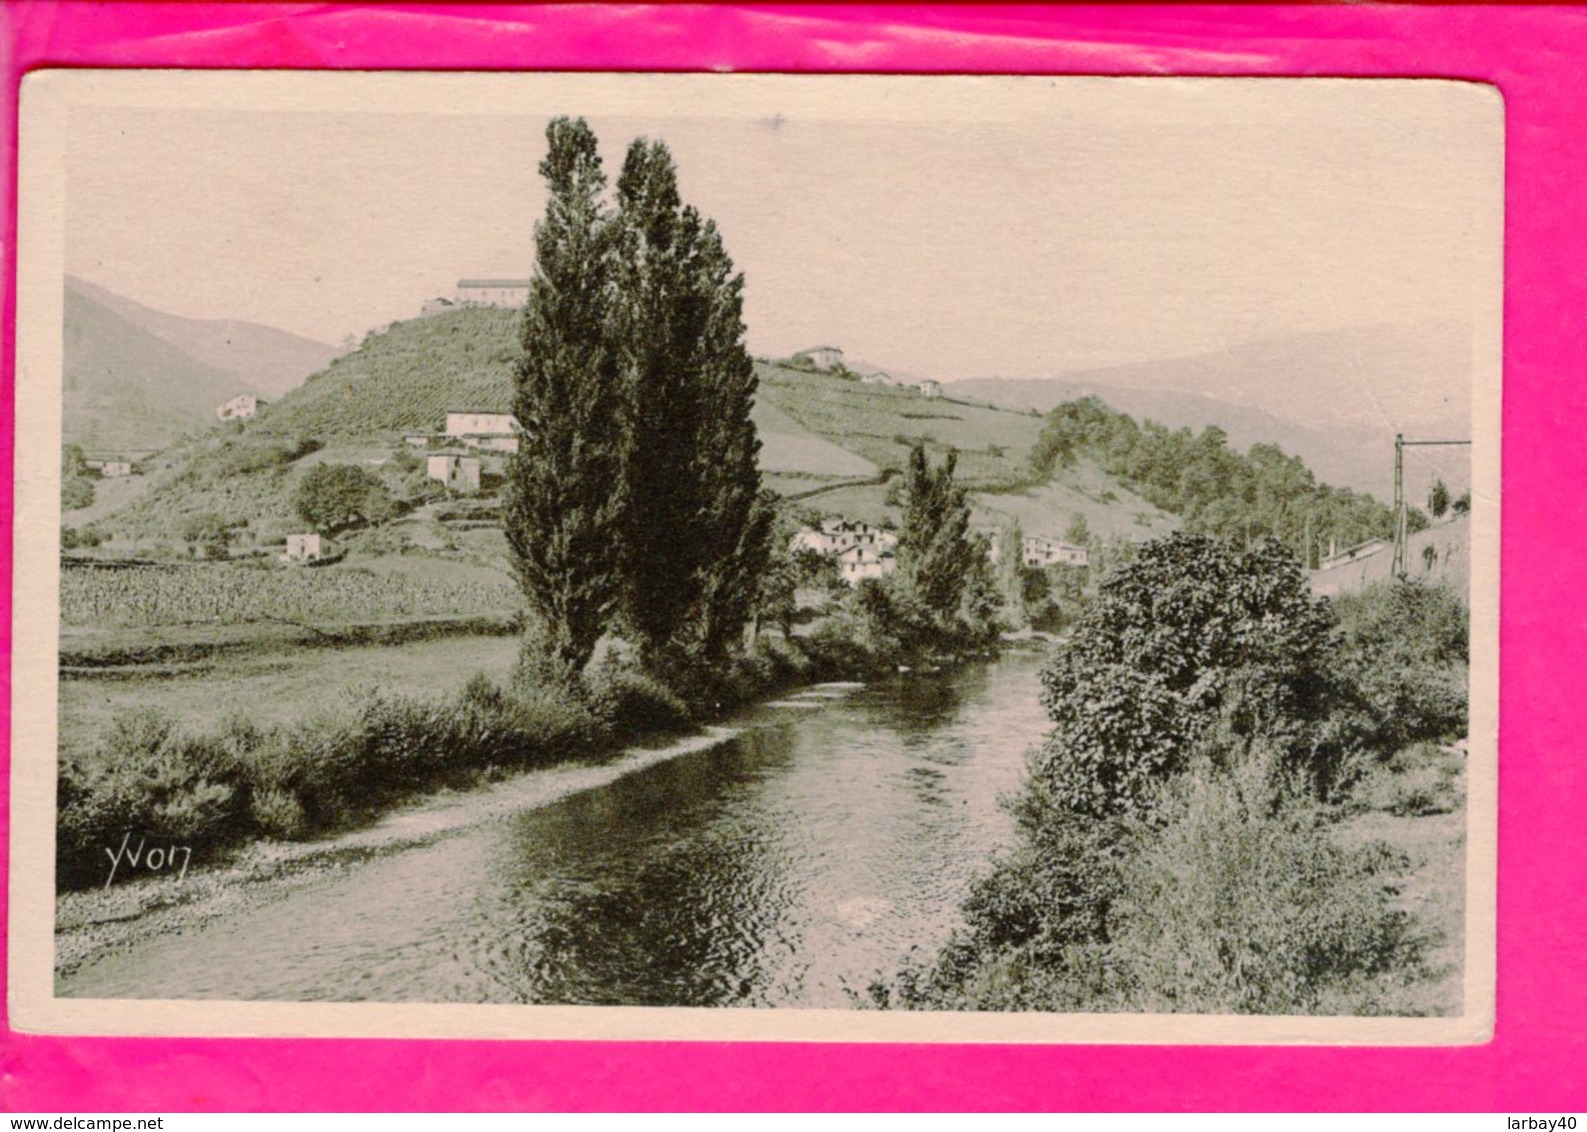 Cpa  Carte Postale Ancienne  - Bidarray Les Bords De La Nive - Bidarray